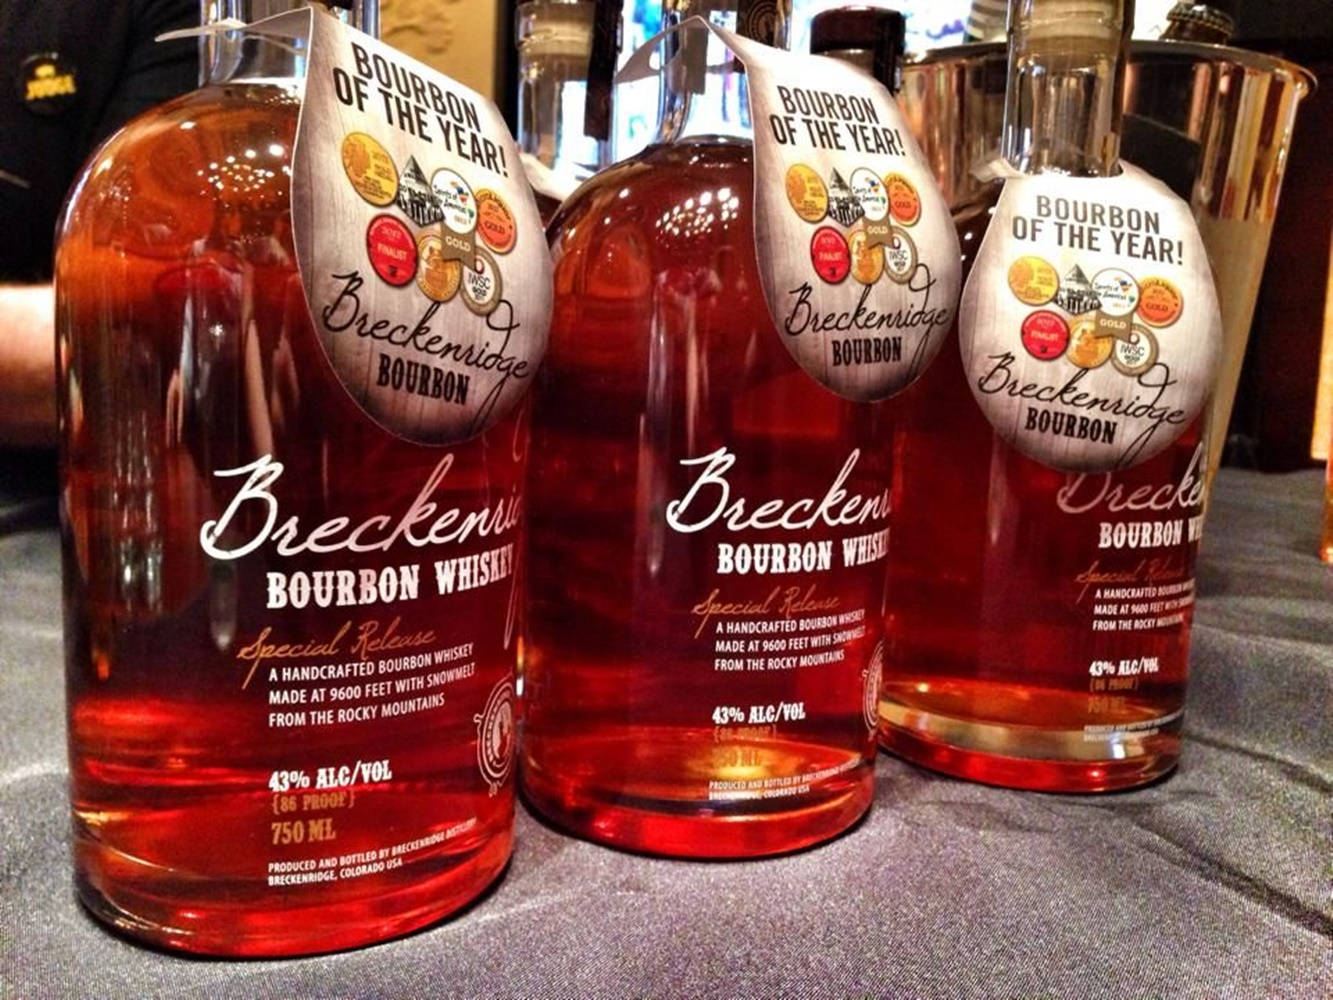 Breckenridgedistillery Bourbon Of The Year: Breckenridge Distillery Bourbon Av Året. Wallpaper